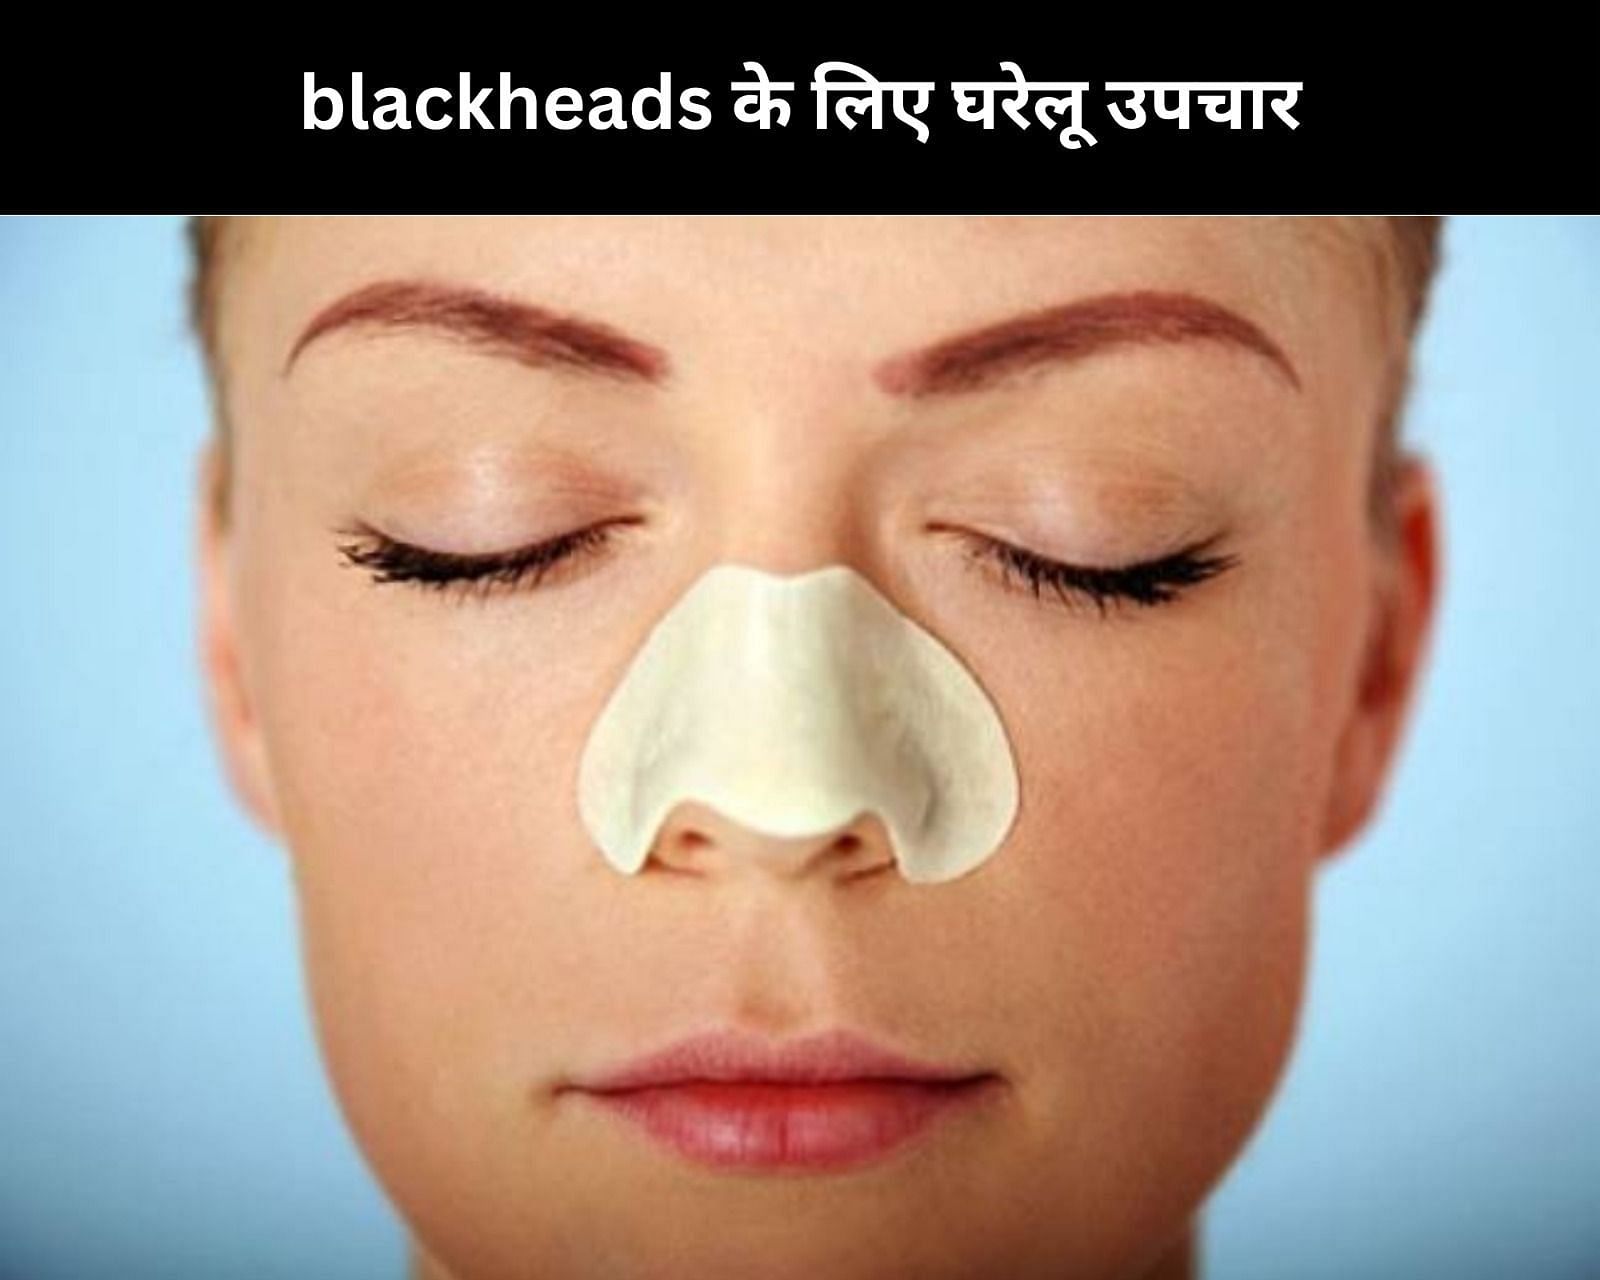 blackheads के लिए 10 घरेलू उपचार (फोटो - sportskeedaहिन्दी)